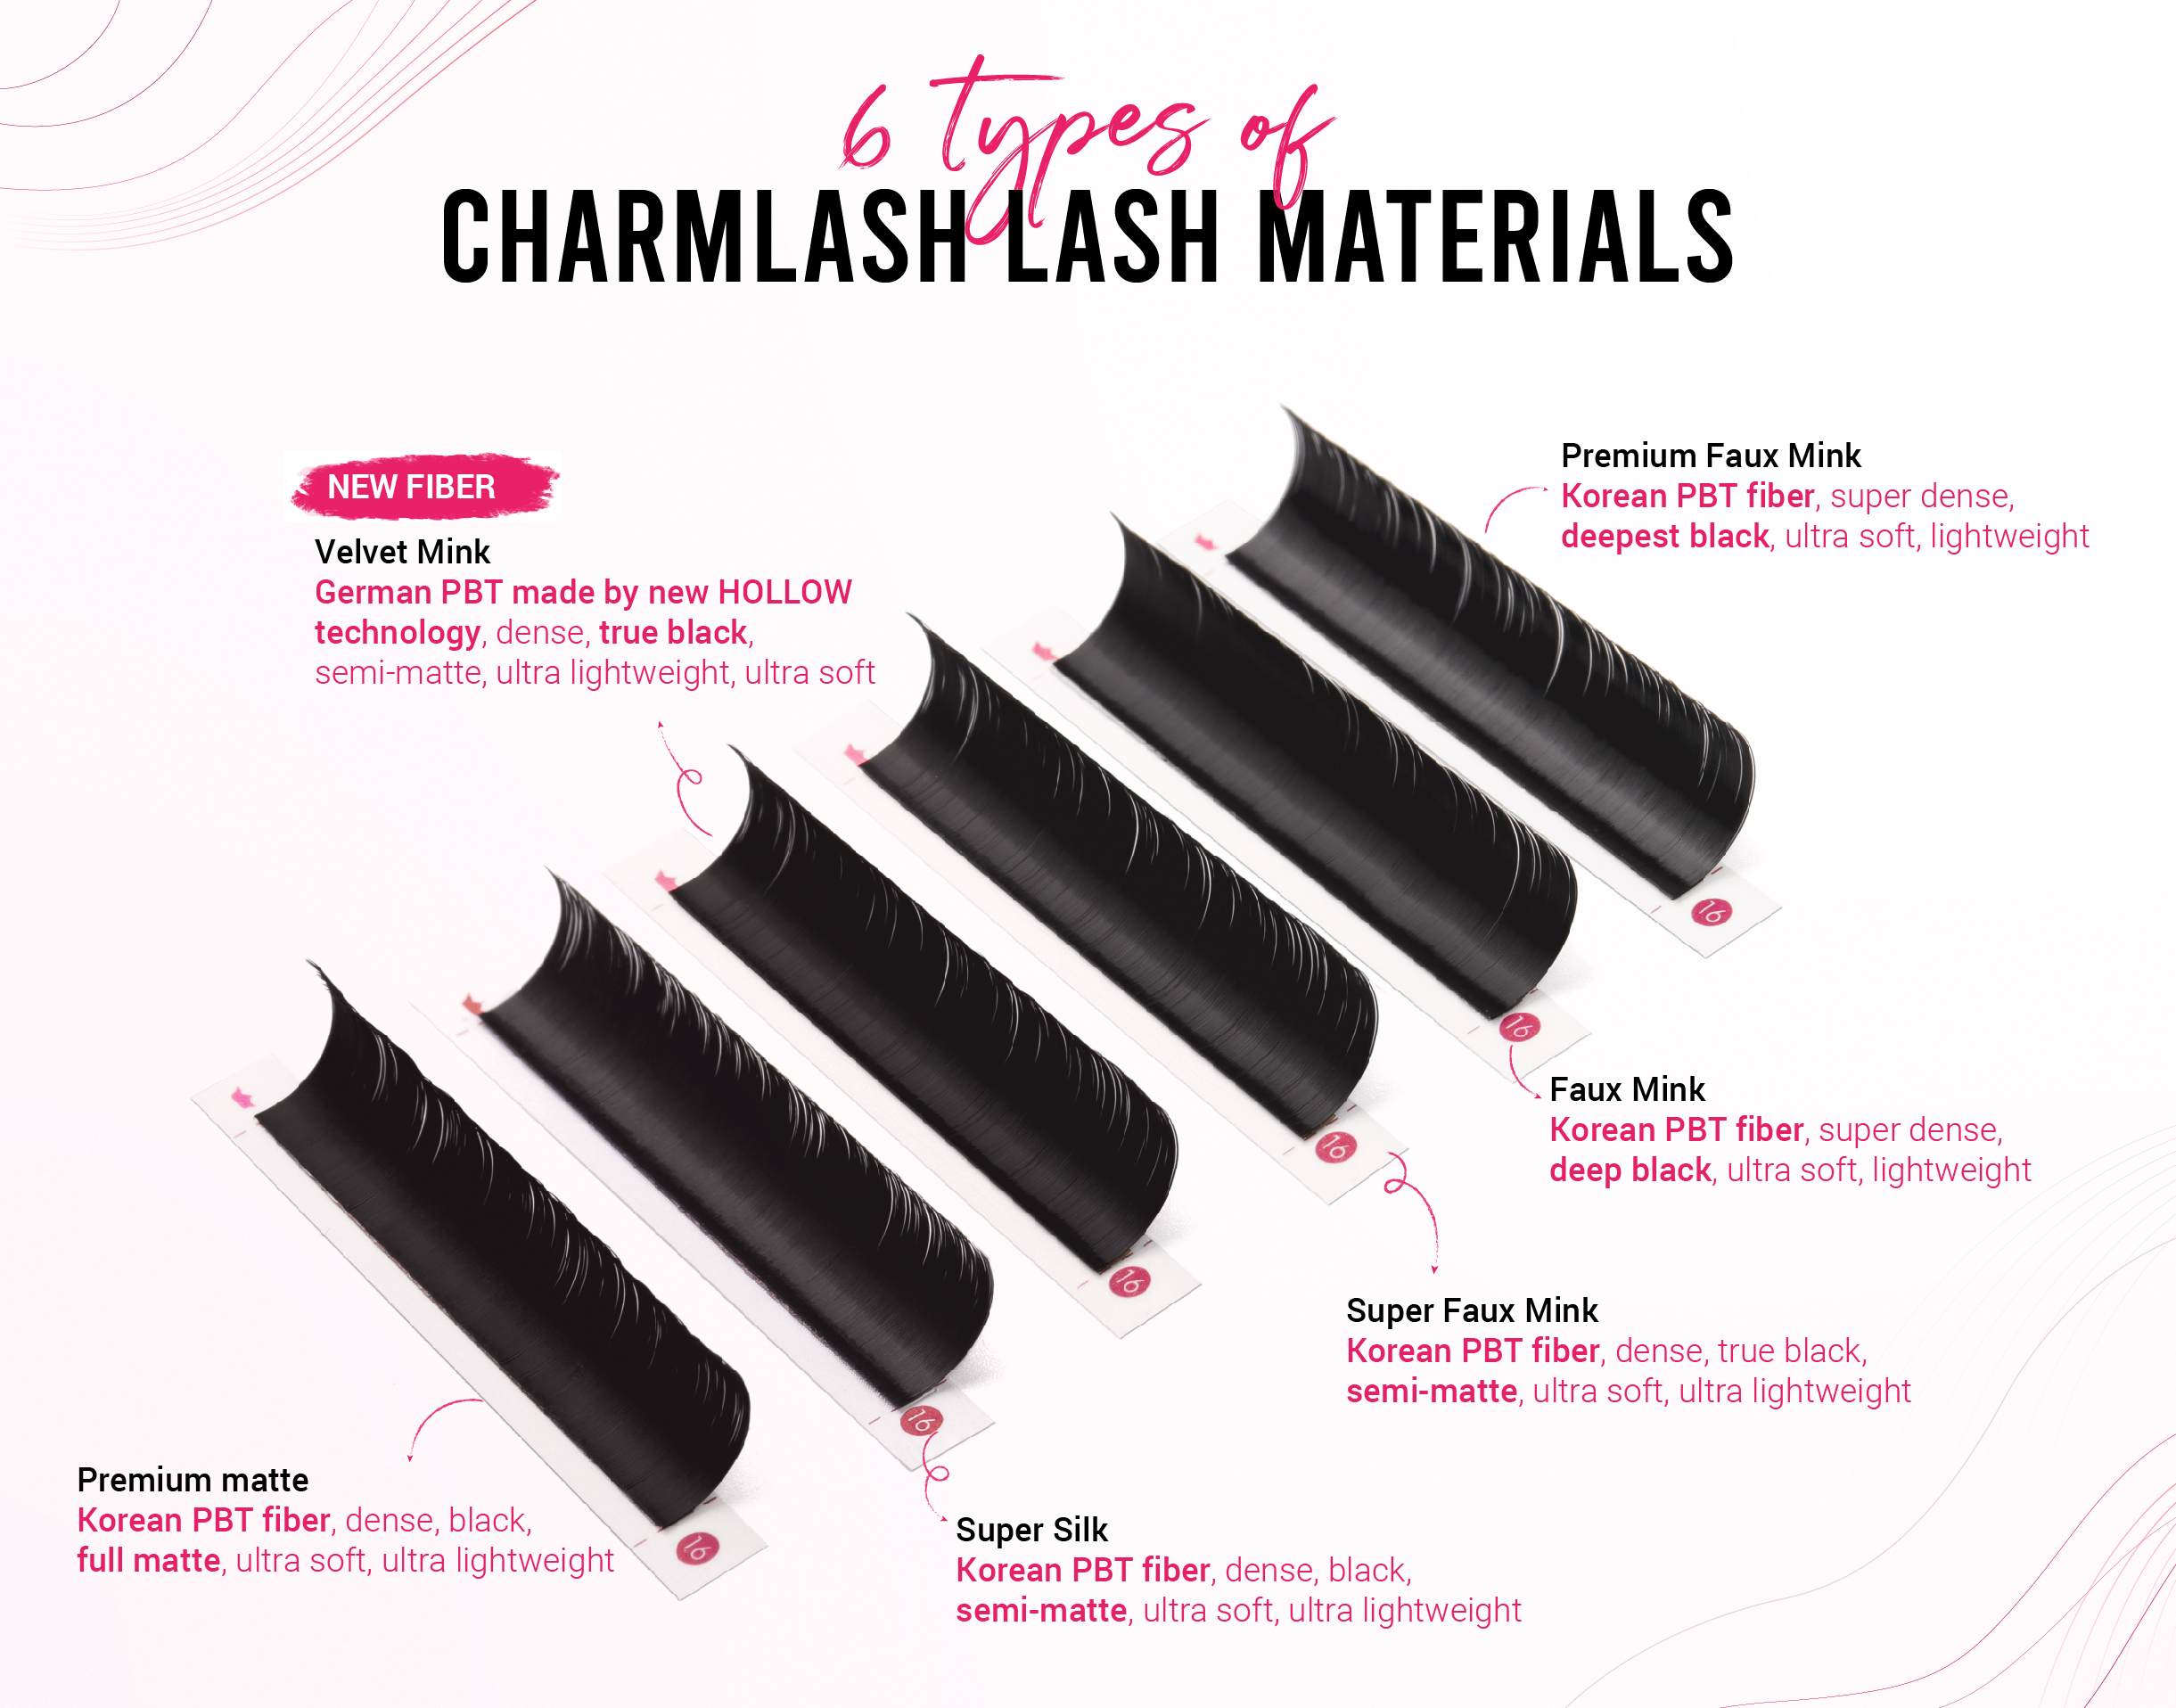 6 types of CharmLash lash materials